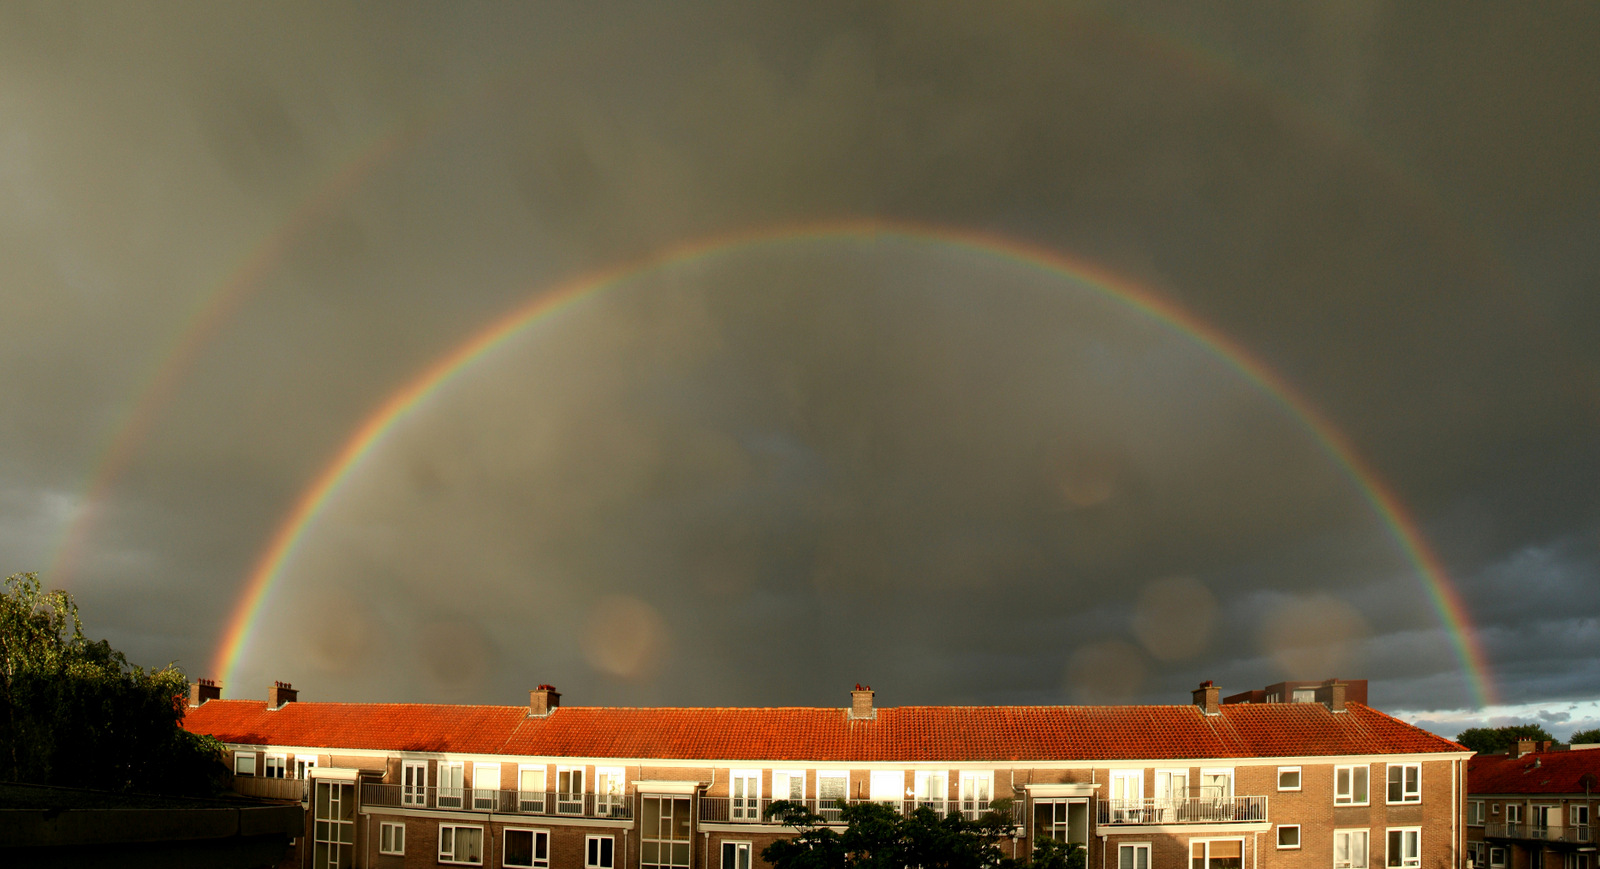 Double rainbow seen from the balcony